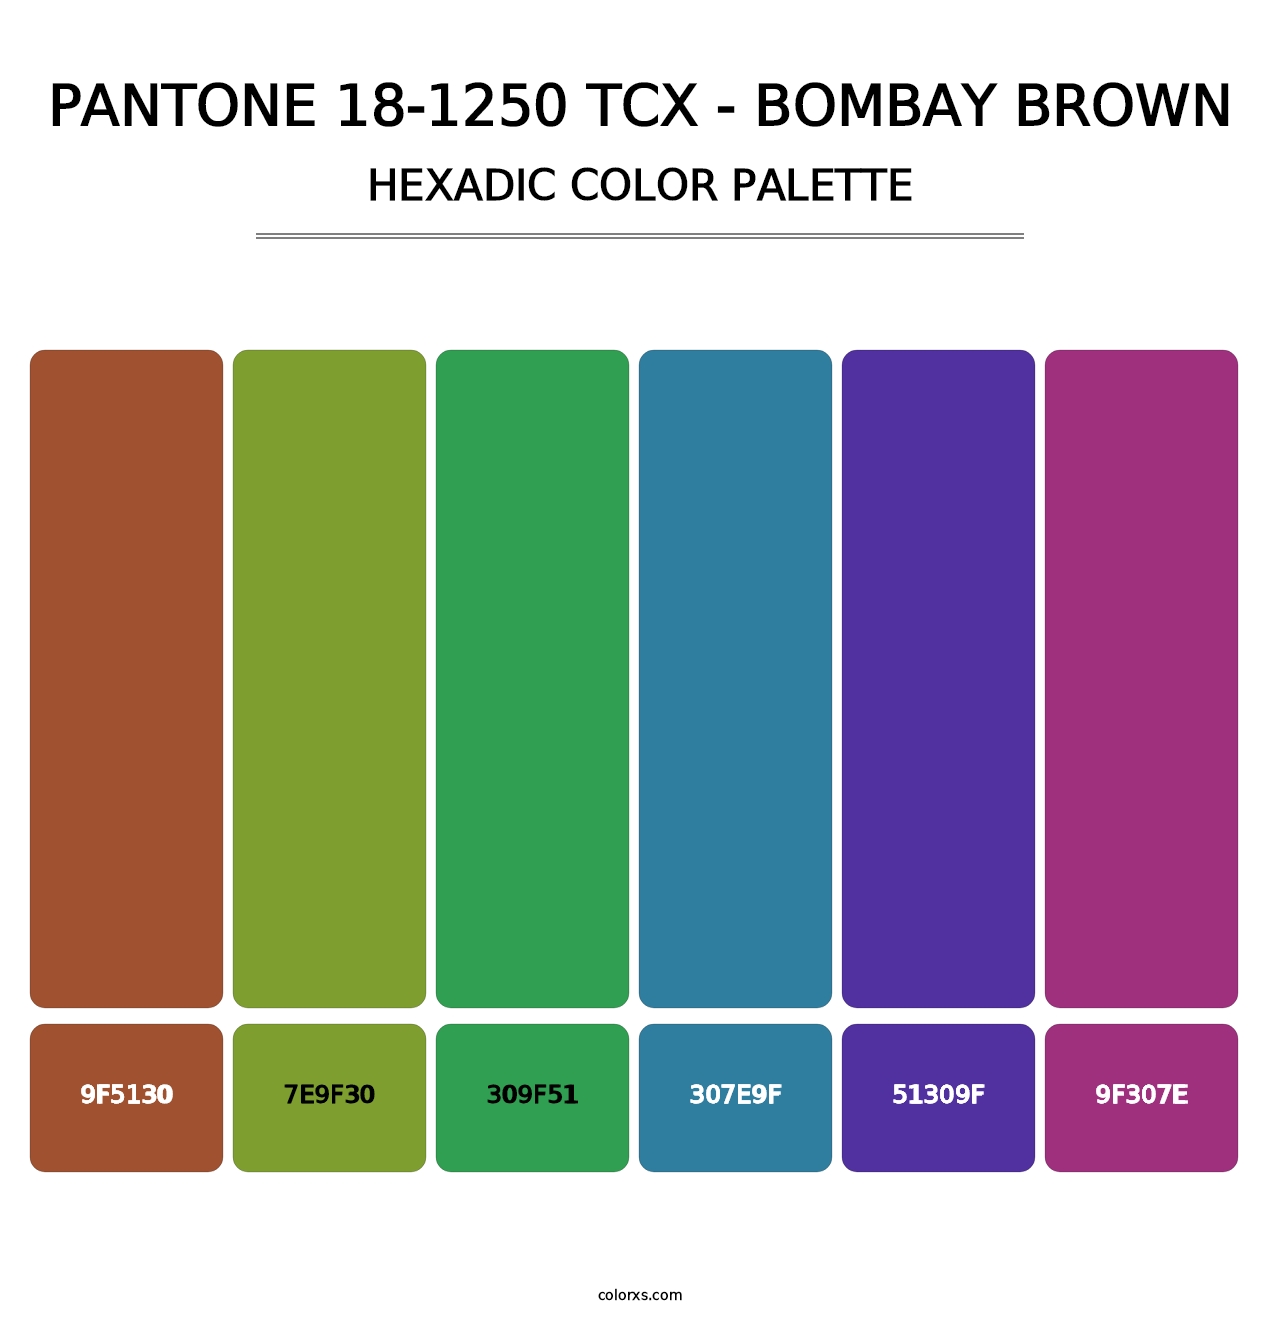 PANTONE 18-1250 TCX - Bombay Brown - Hexadic Color Palette